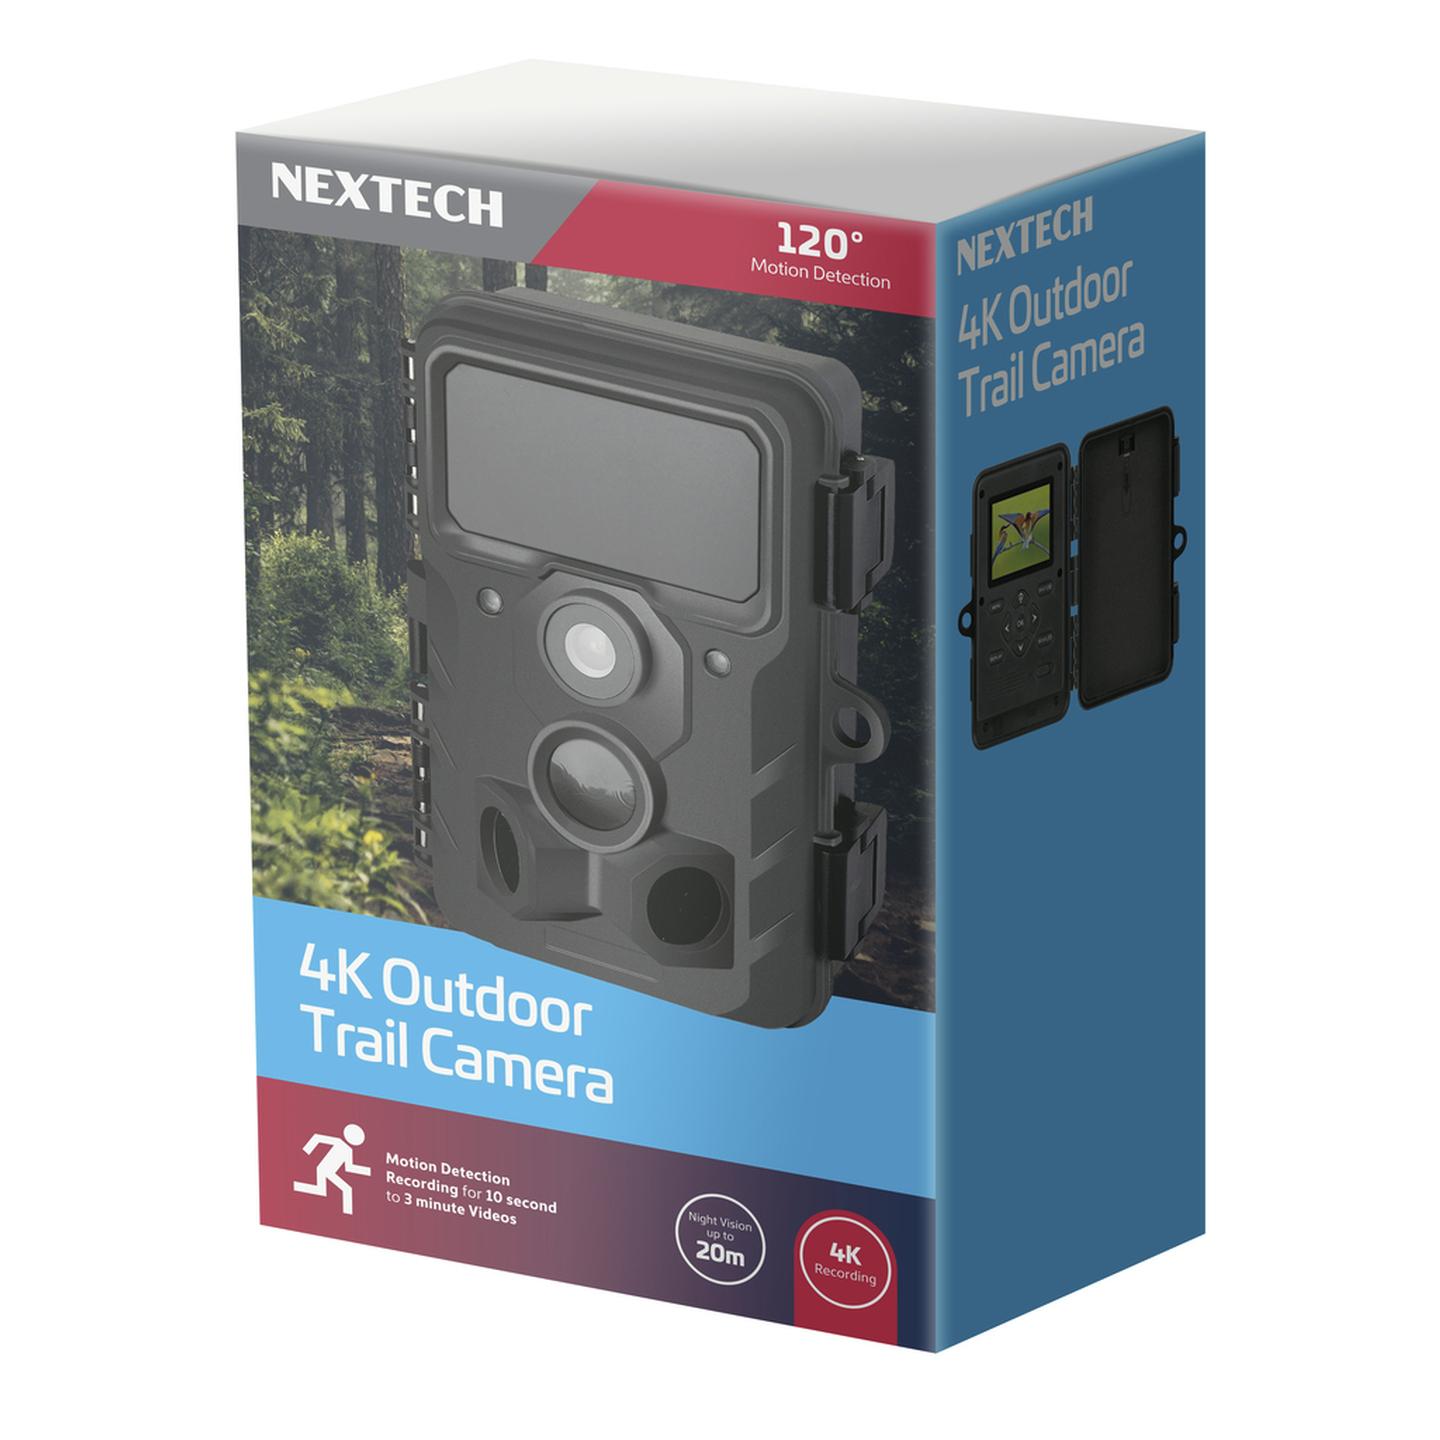 4K Outdoor Trail Camera